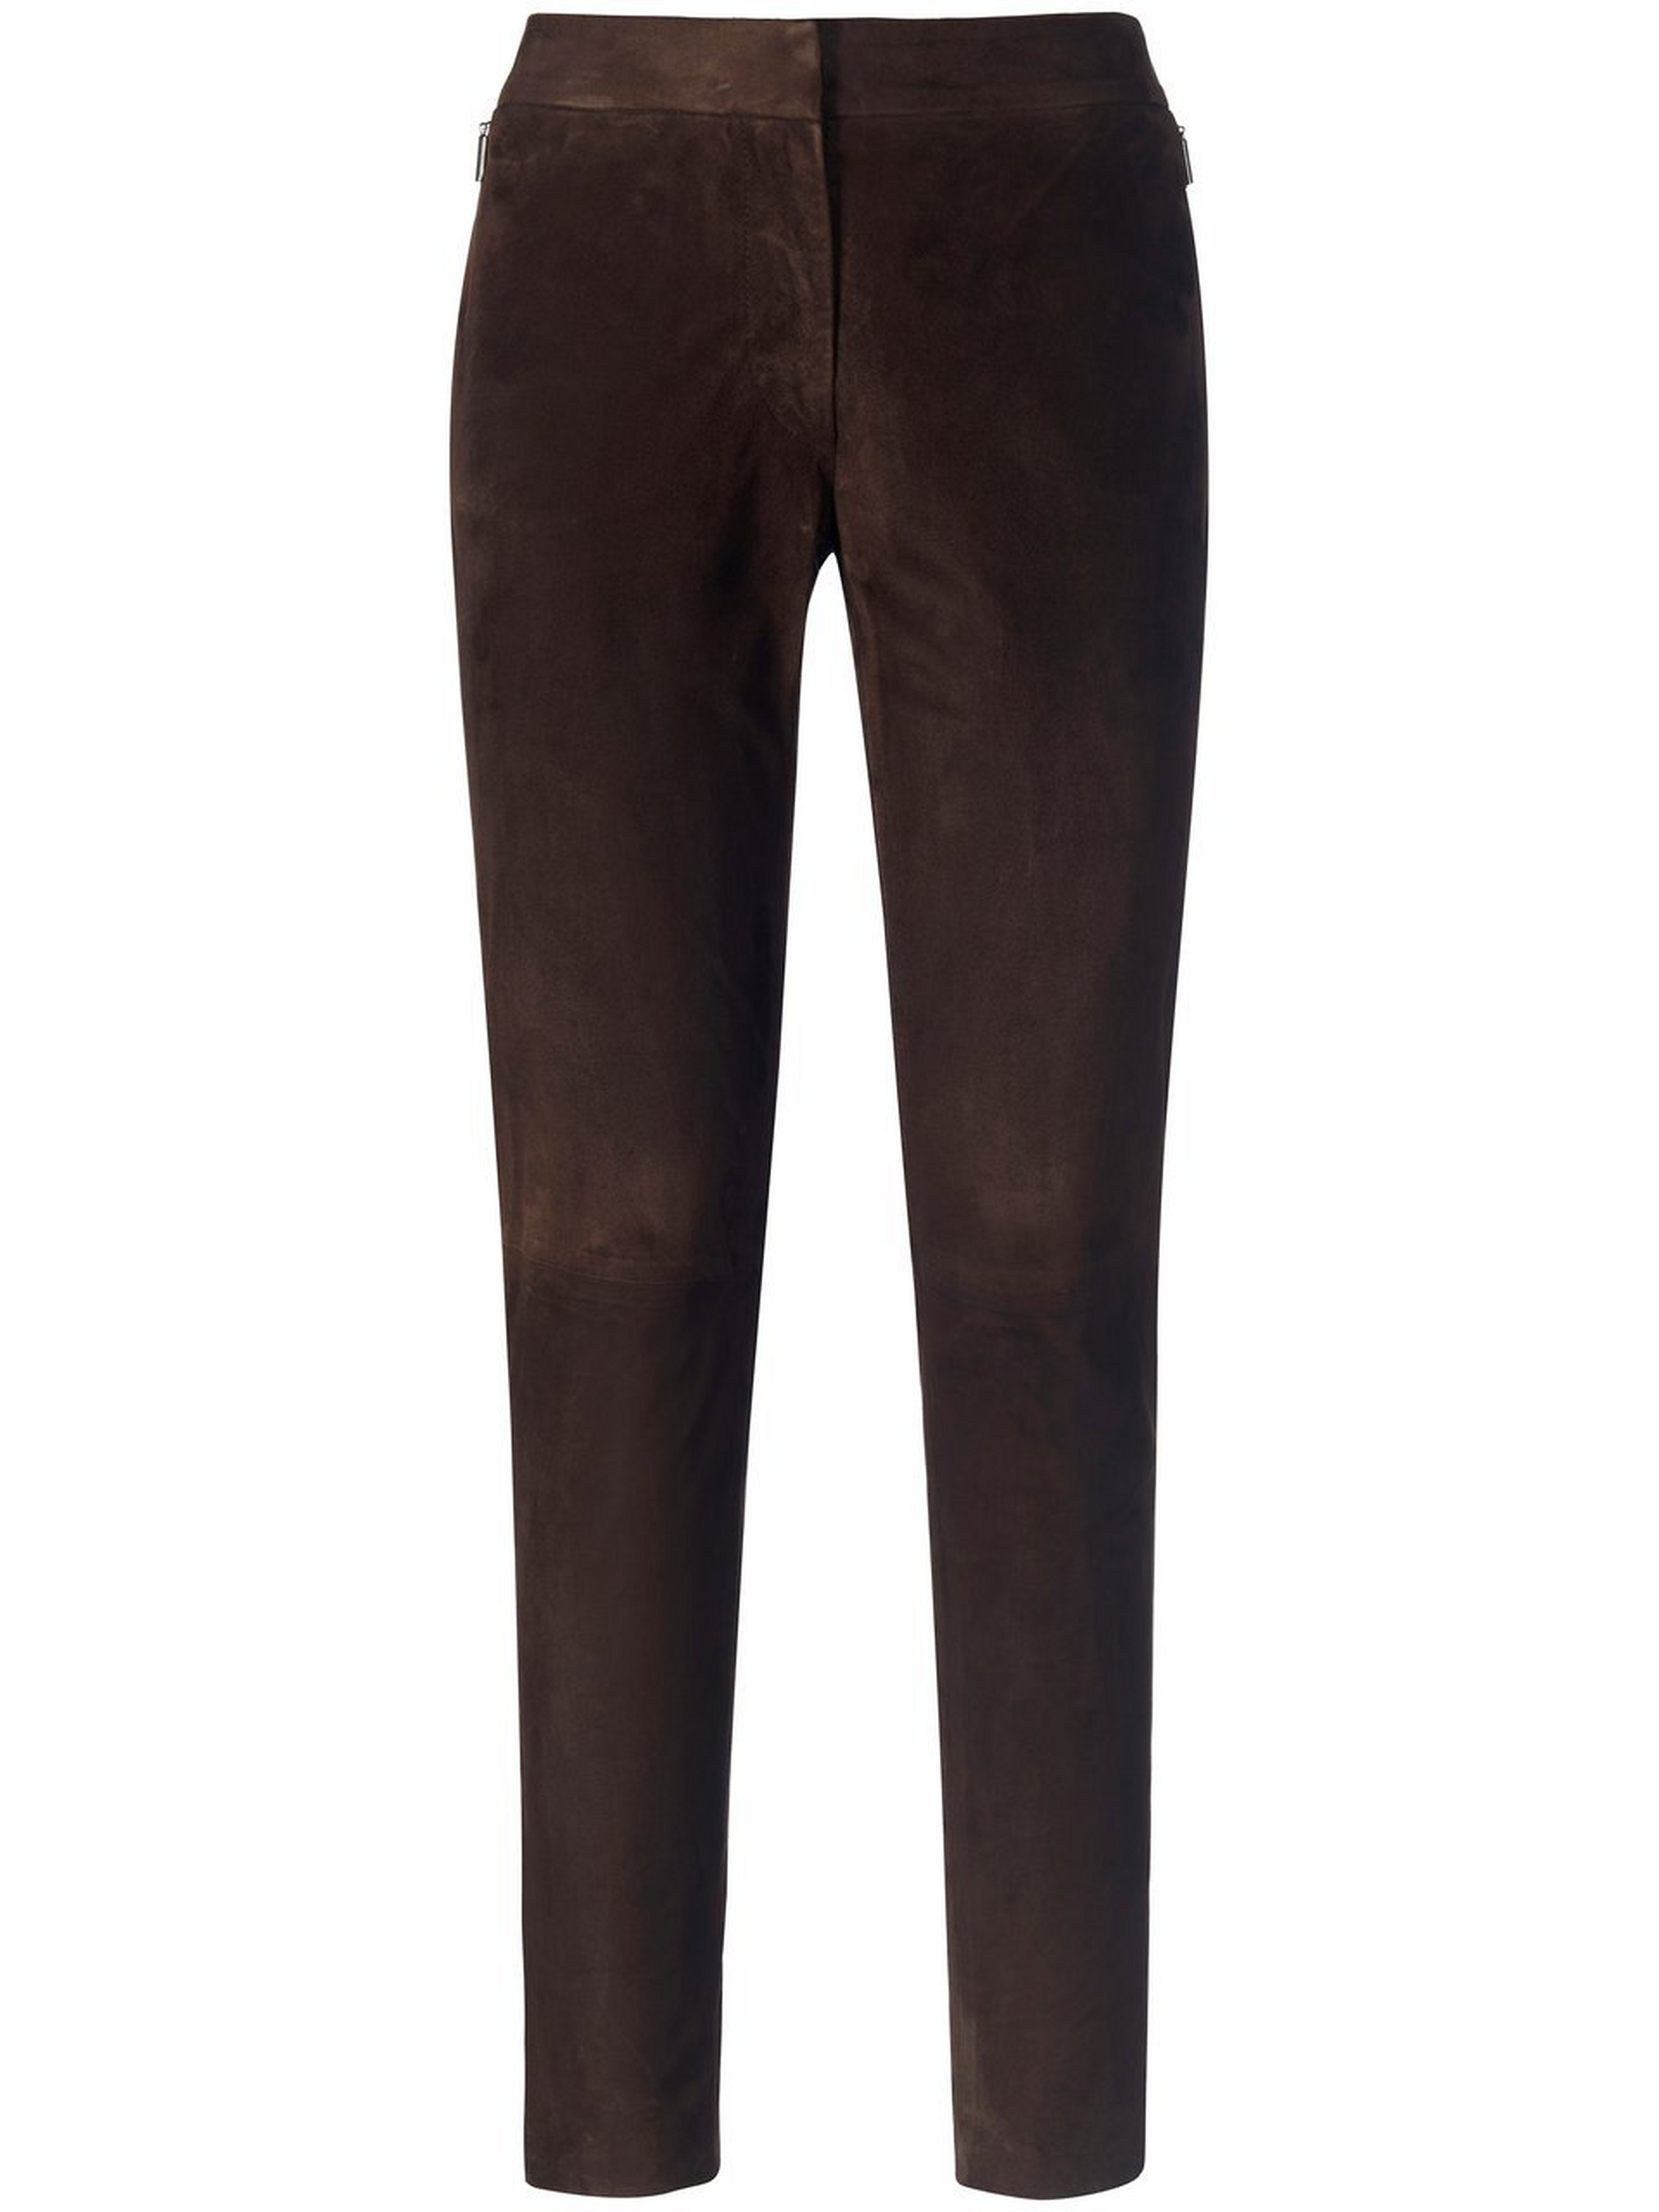 Le pantalon cuir velours chevreau  Fadenmeister Berlin marron taille 42